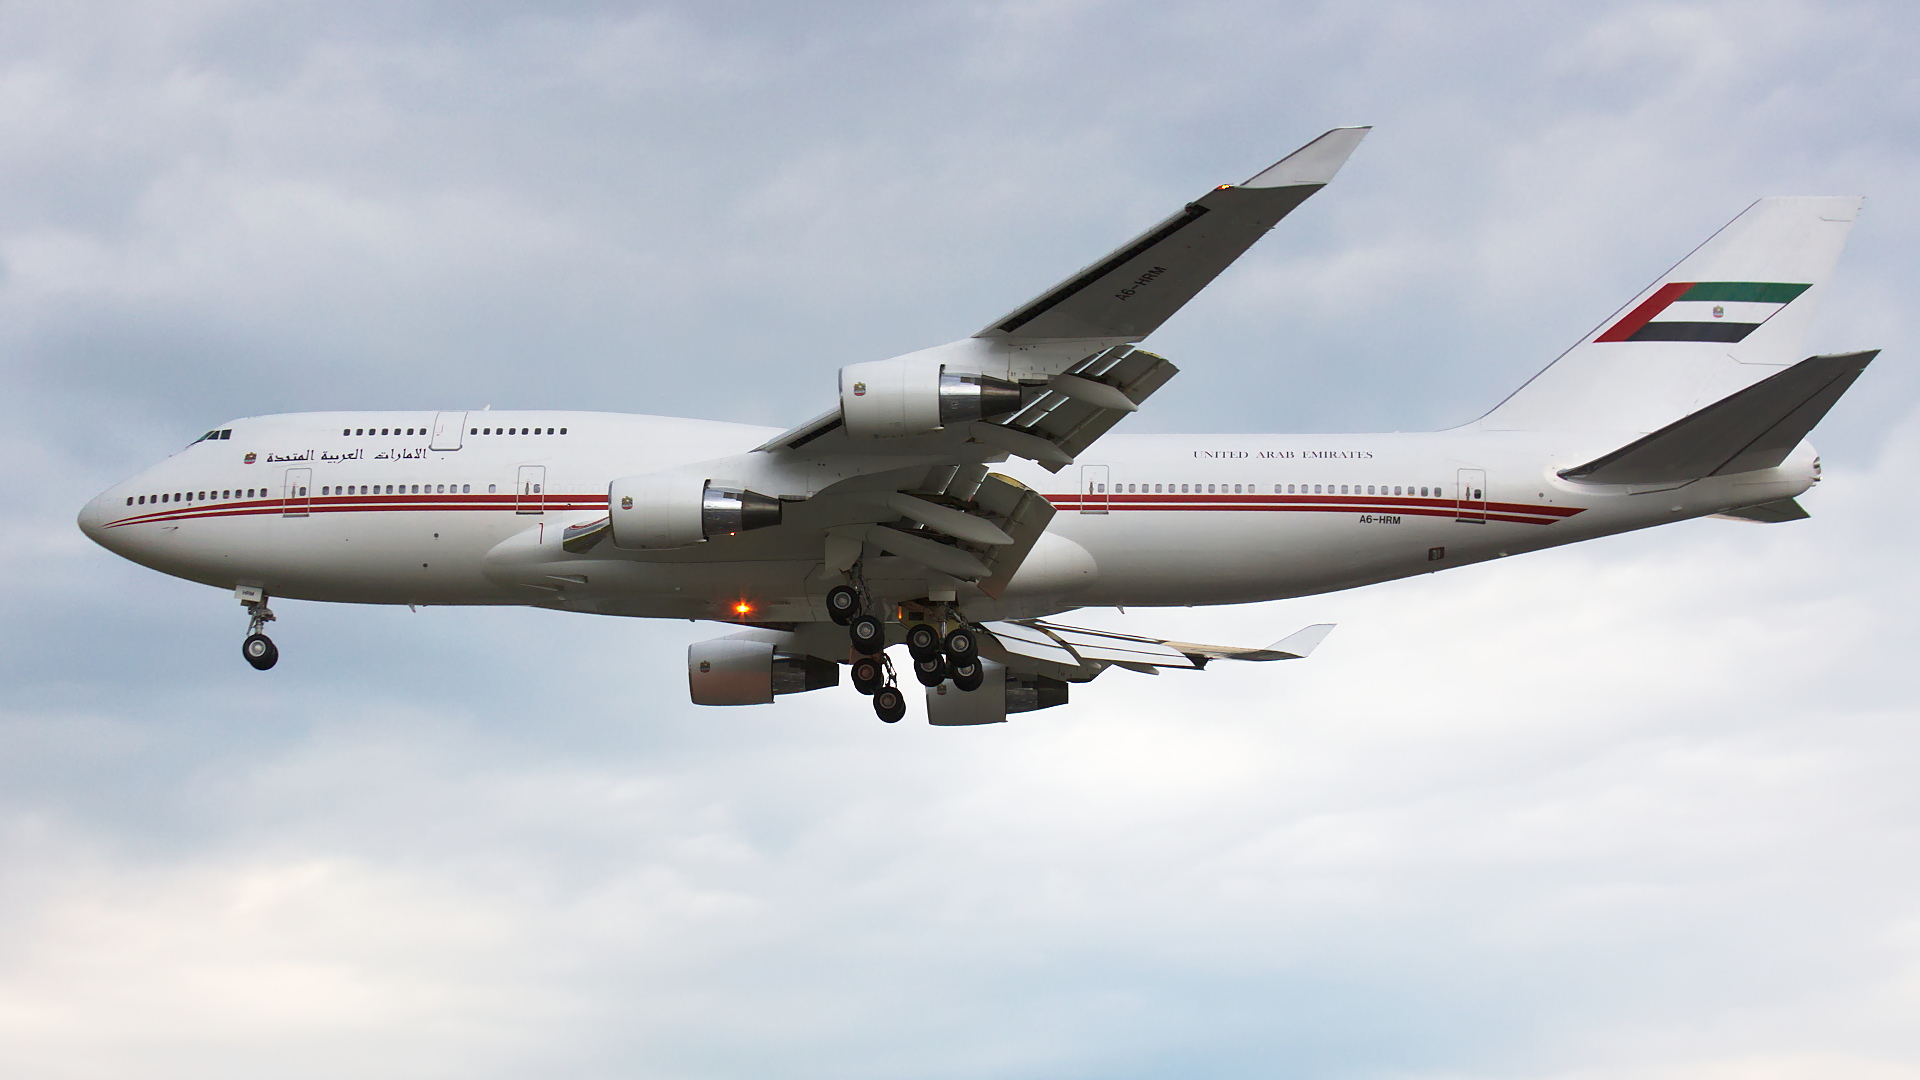 A6-HRM ✈ Dubai Air Wing / Royal Flight Boeing 747-422 @ London-Heathrow